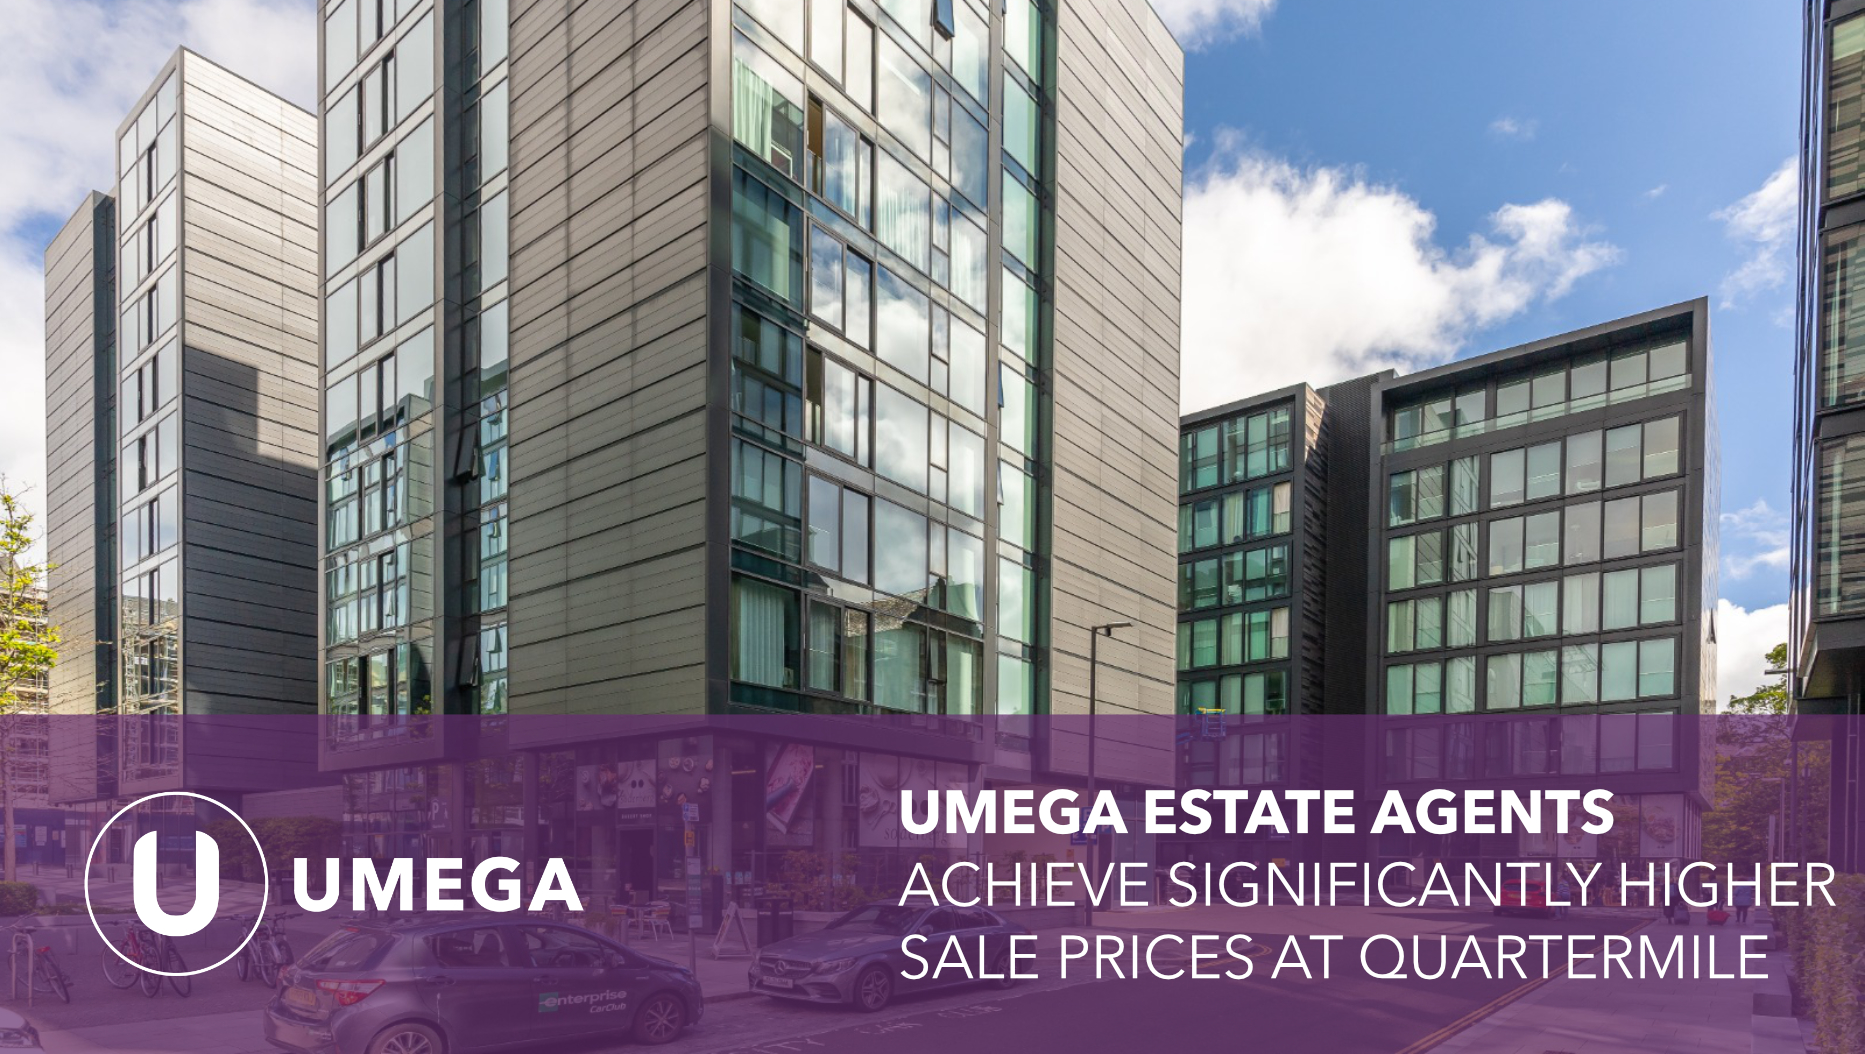 UMEGA Estate Agents achieve significantly higher sale prices at Quartermile